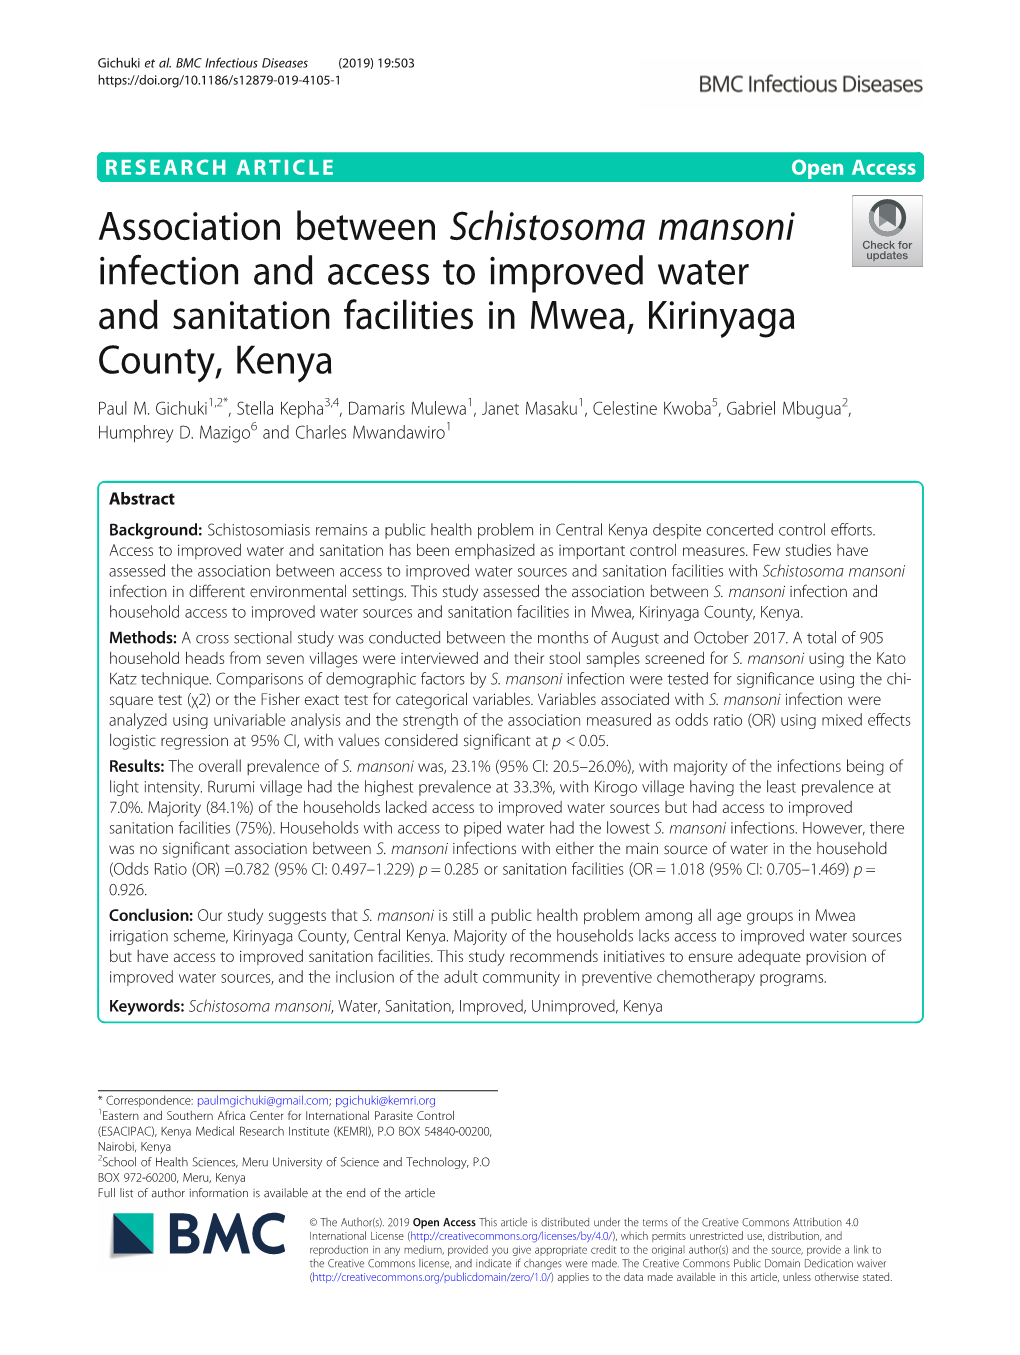 Association Between Schistosoma Mansoni Infection and Access to Improved Water and Sanitation Facilities in Mwea, Kirinyaga County, Kenya Paul M